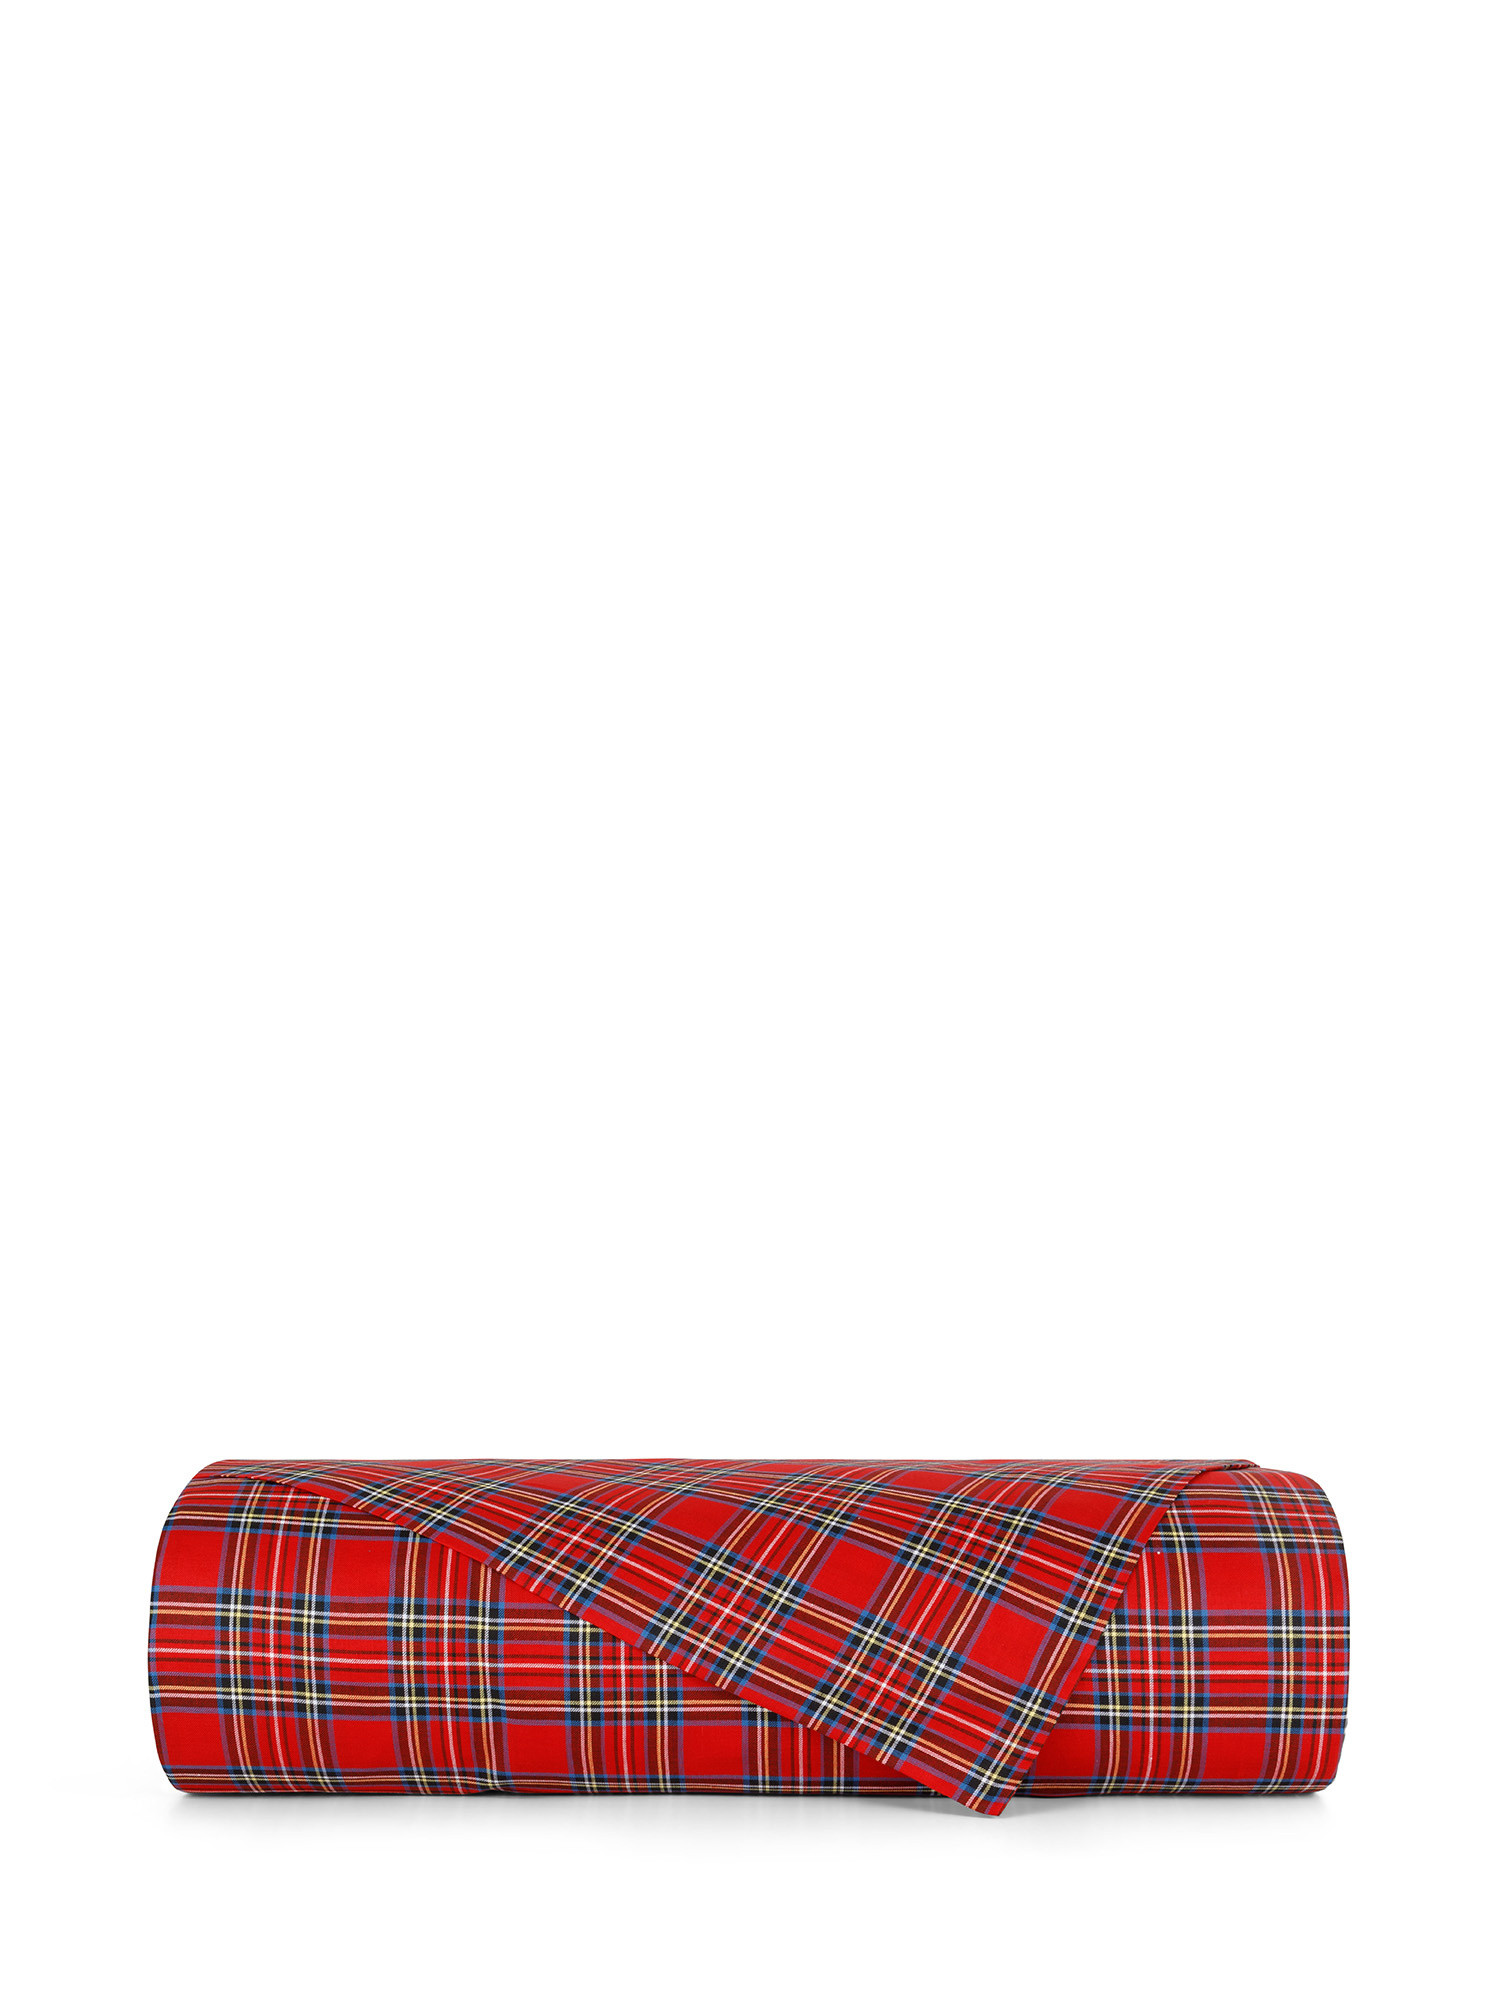 Warm tartan cotton duvet cover, Red, large image number 1